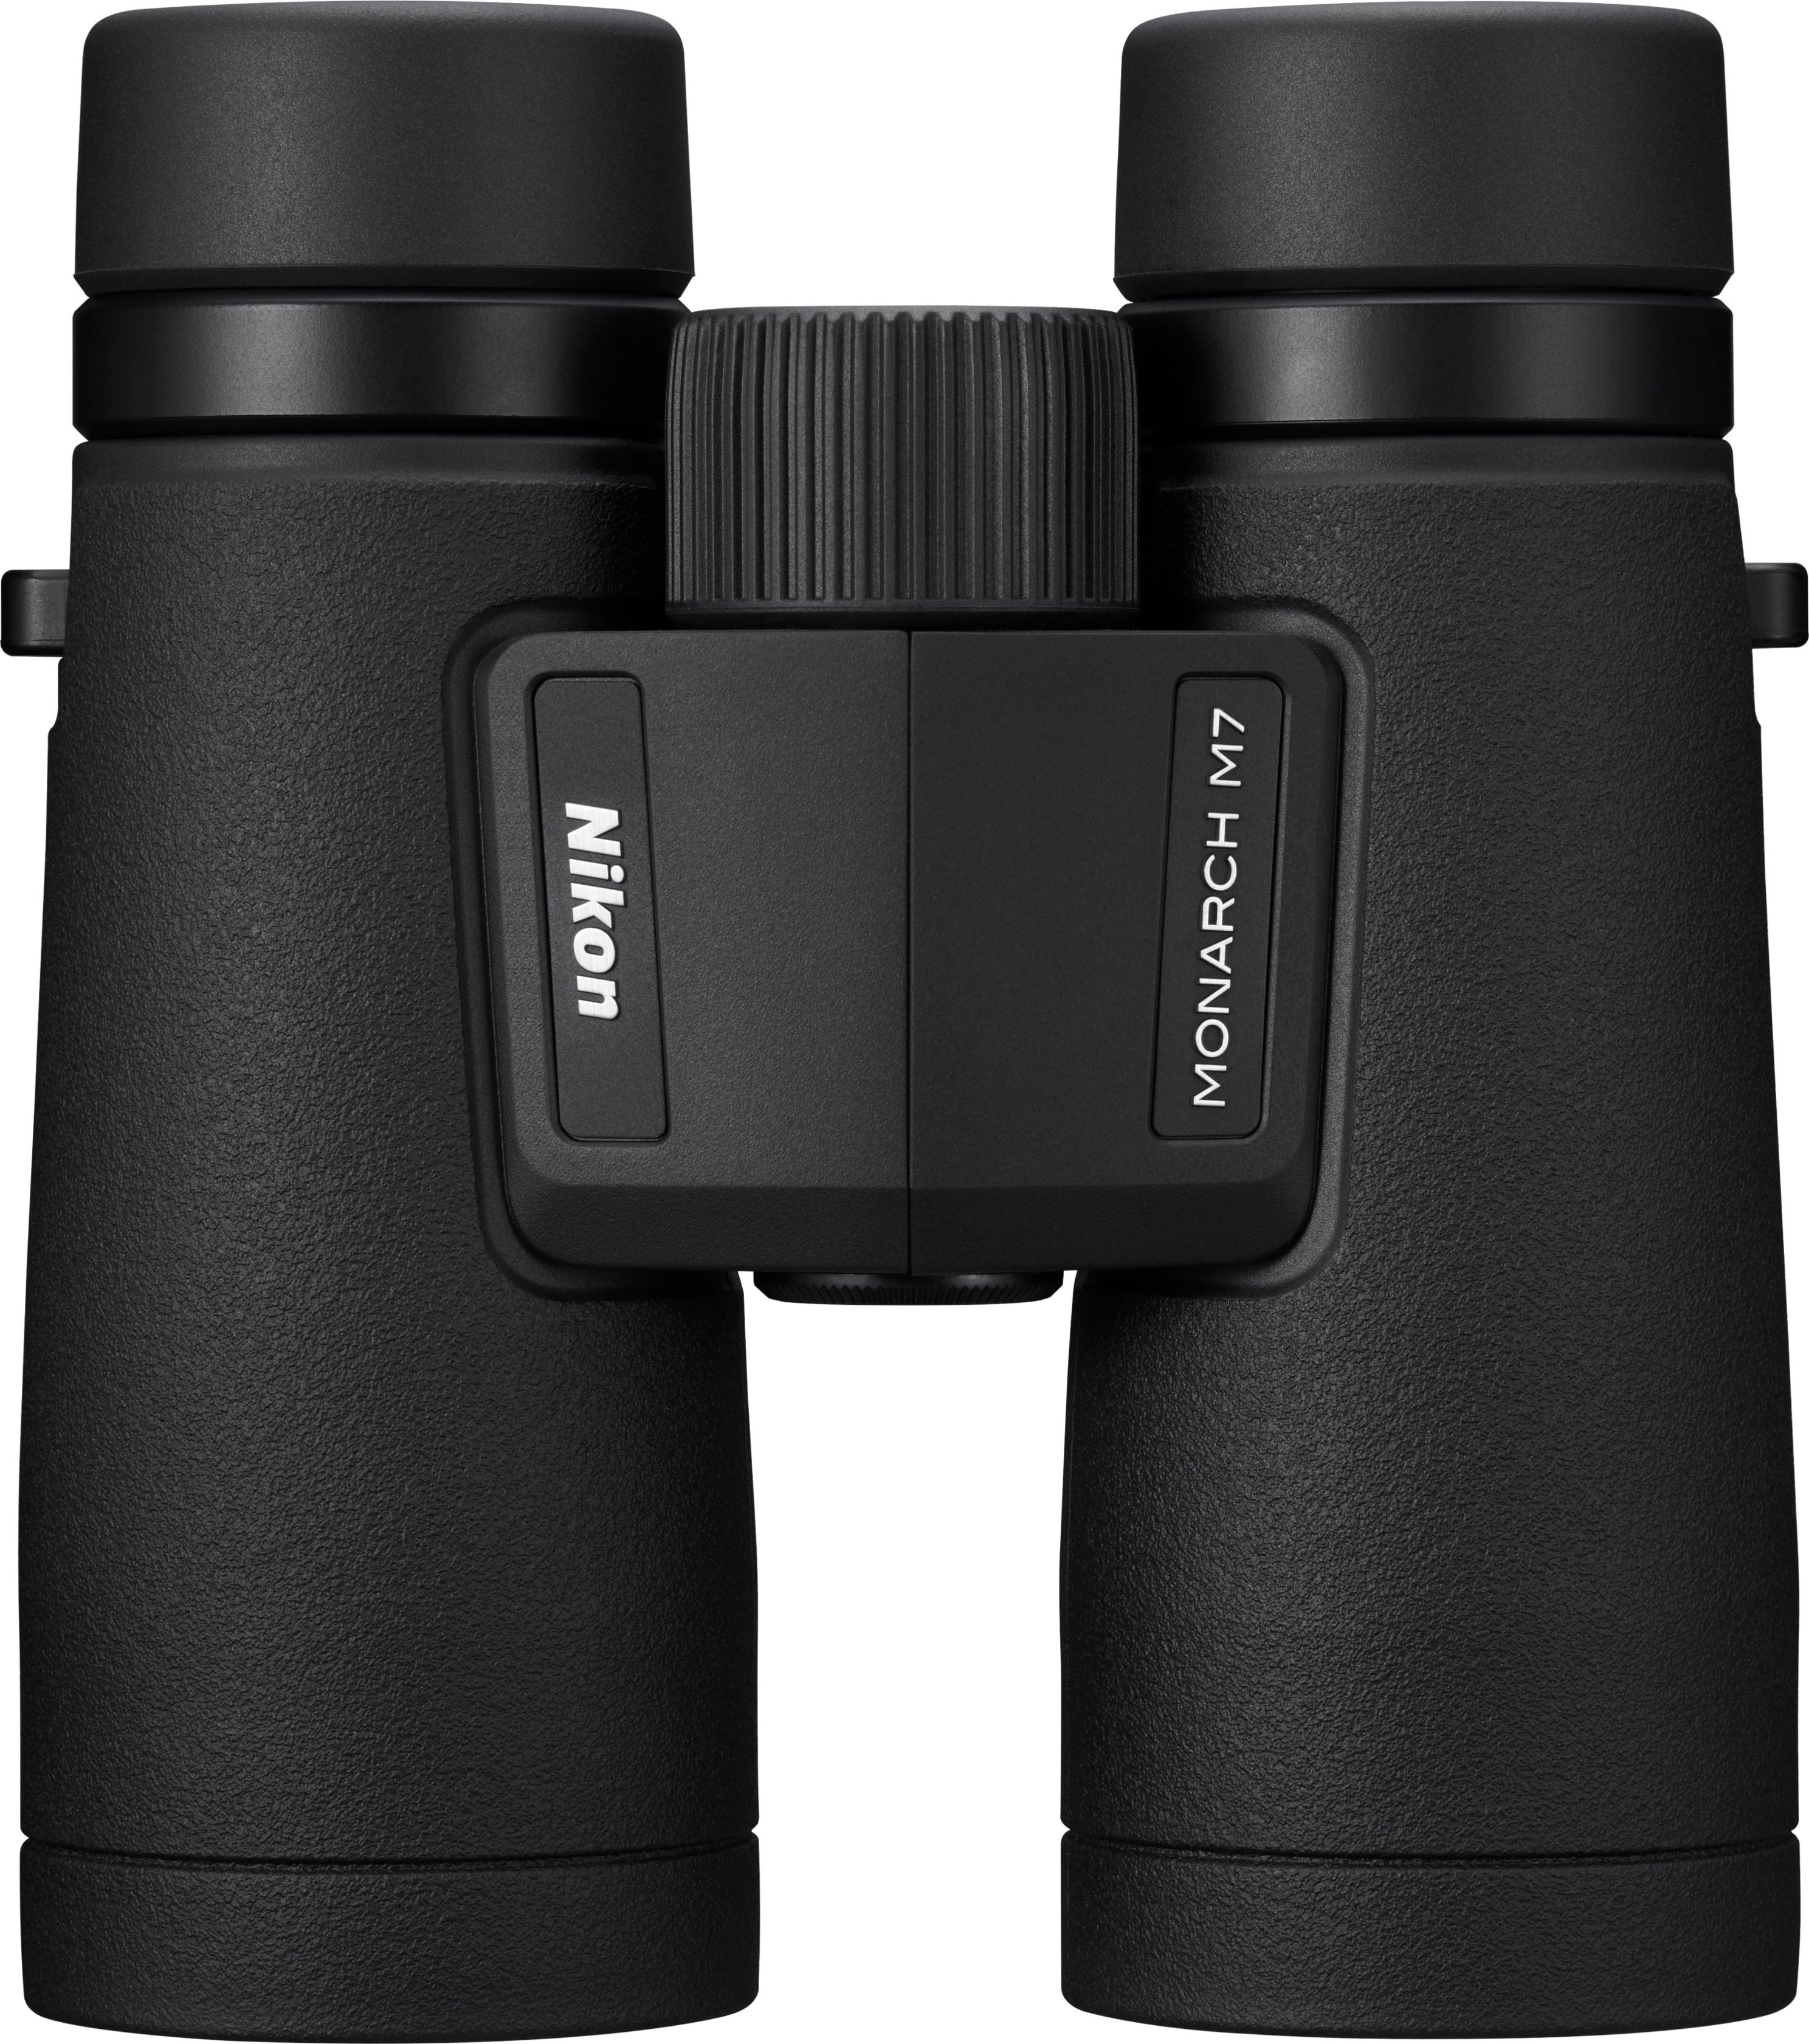 Angle View: Nikon - Monarch M7 10X42 Binocular